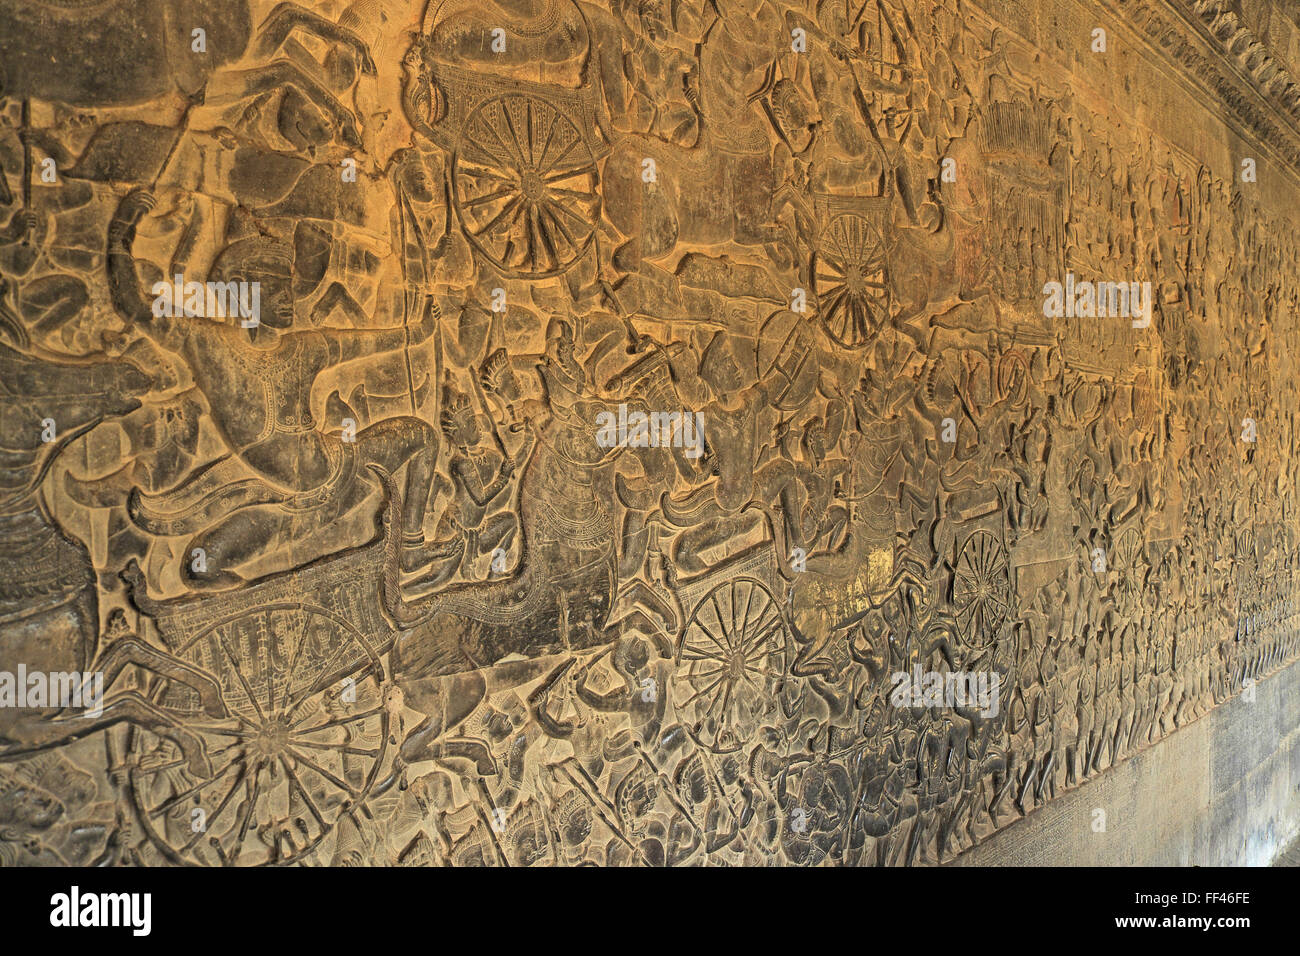 Battle of Kuruksheta (from the Hindu epic Mahabharata), western gallery, Angkor Wat, near Siem Reap, Cambodia, Asia. Stock Photo